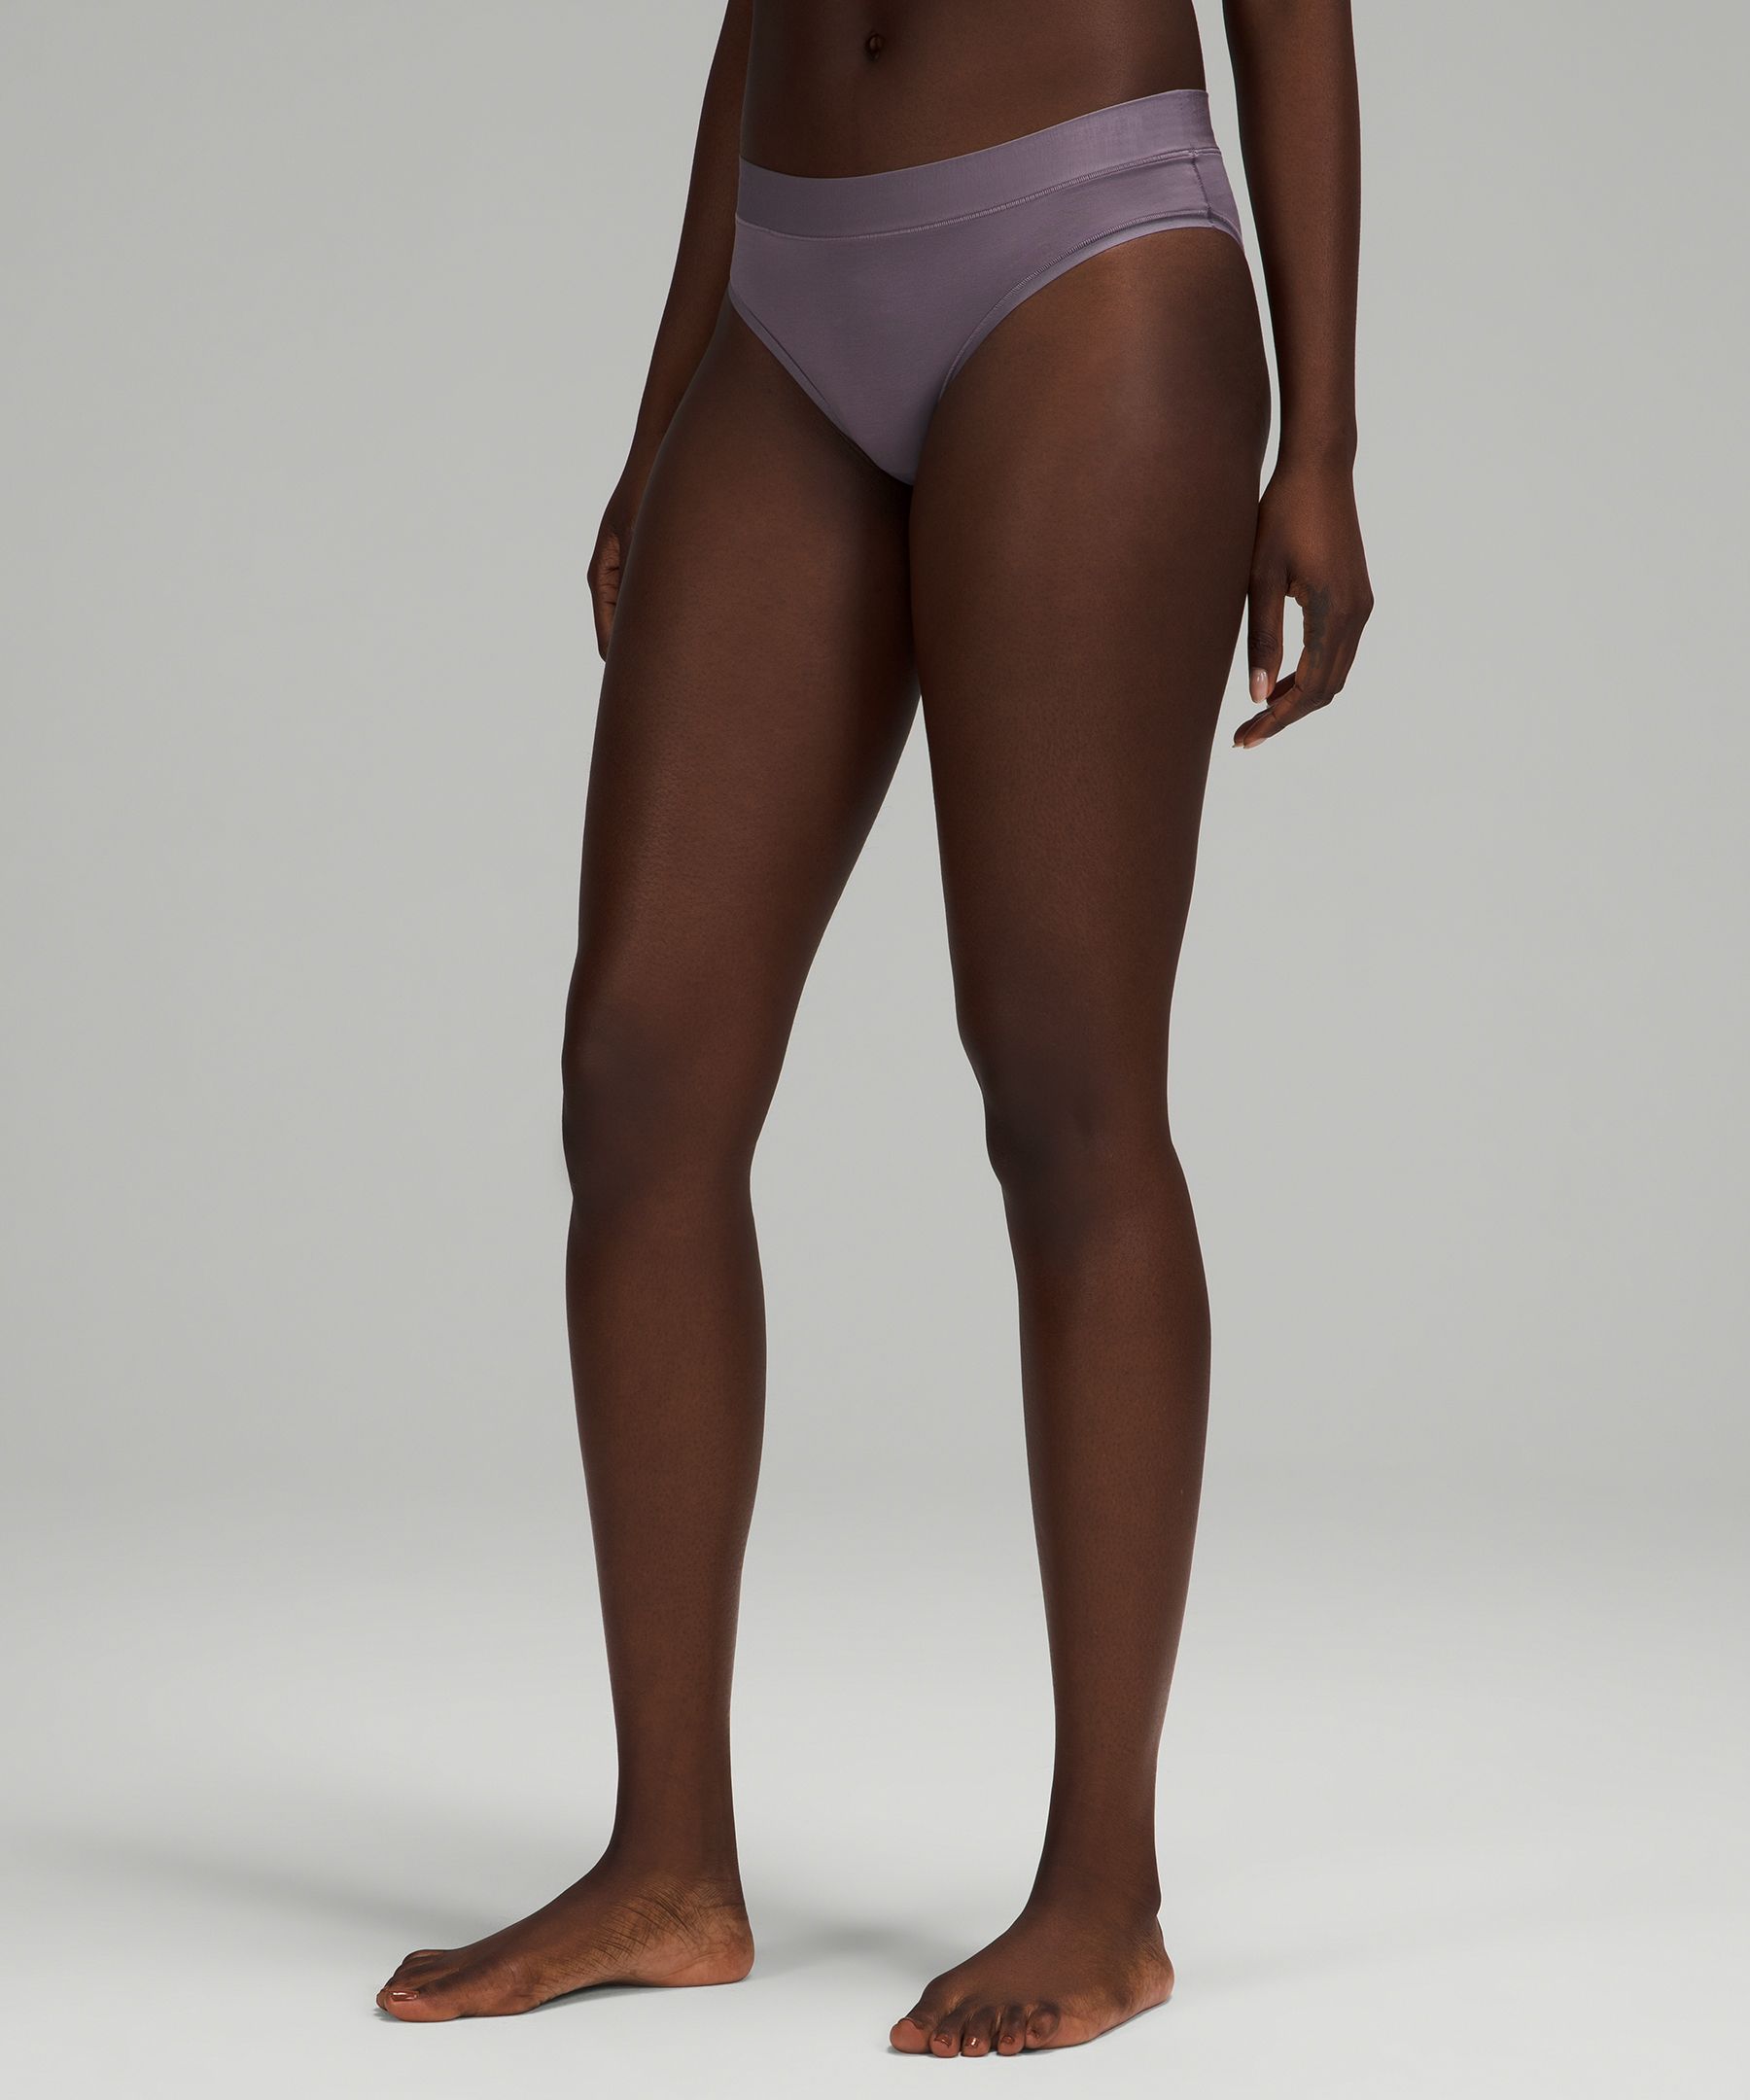 Lululemon Underwear Black Friday South Africa - Pink Taupe Womens UnderEase  Bikini